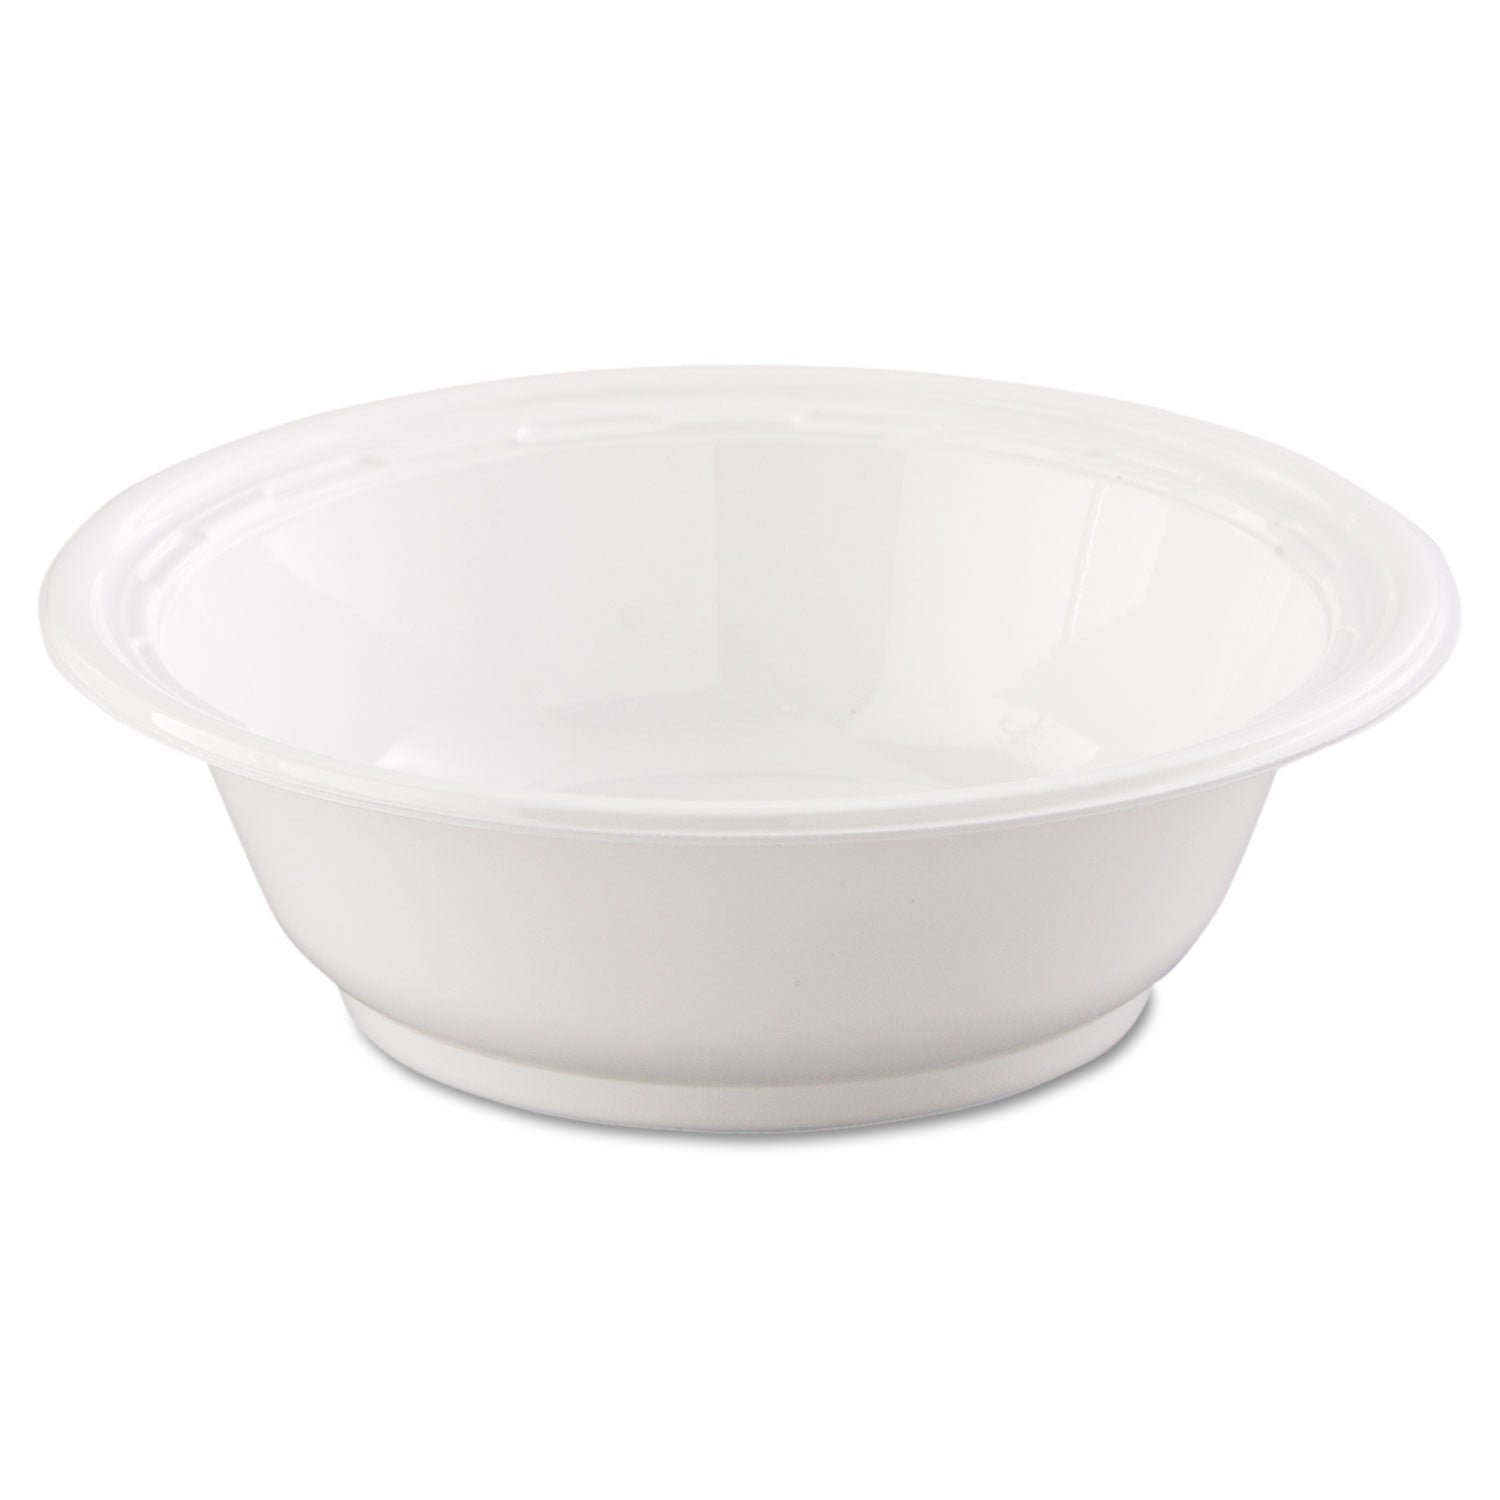 Famous Service Plastic Dinnerware, Bowl, 12 oz, White, 125/Pack, 8 Packs/Carton - 